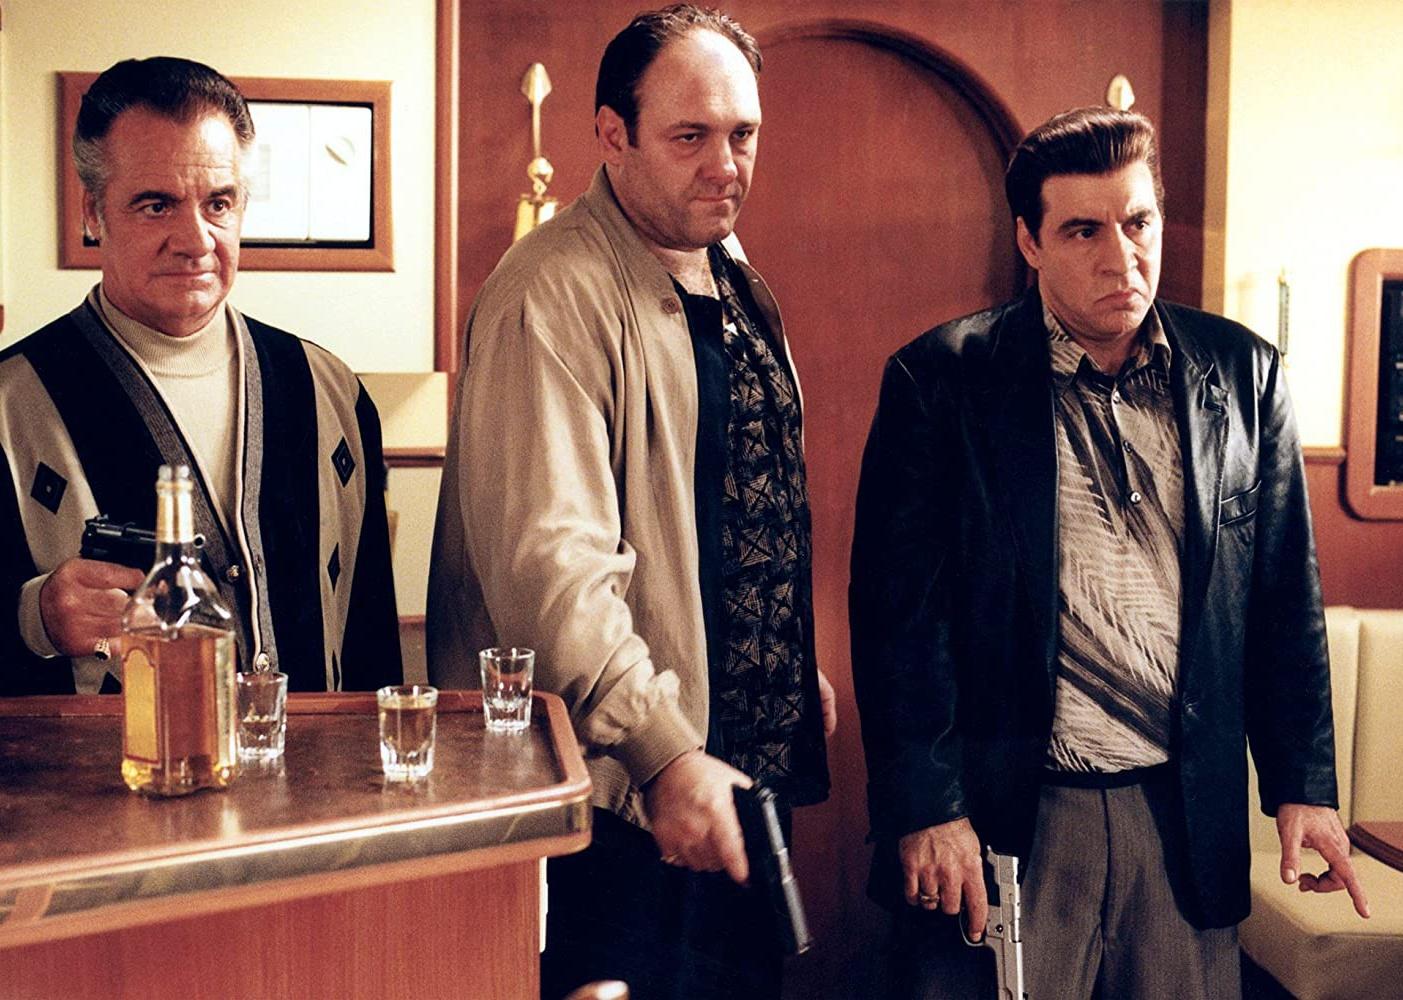 James Gandolfini, Tony Sirico and Steven Van Zandt stand behind a bar holding guns.